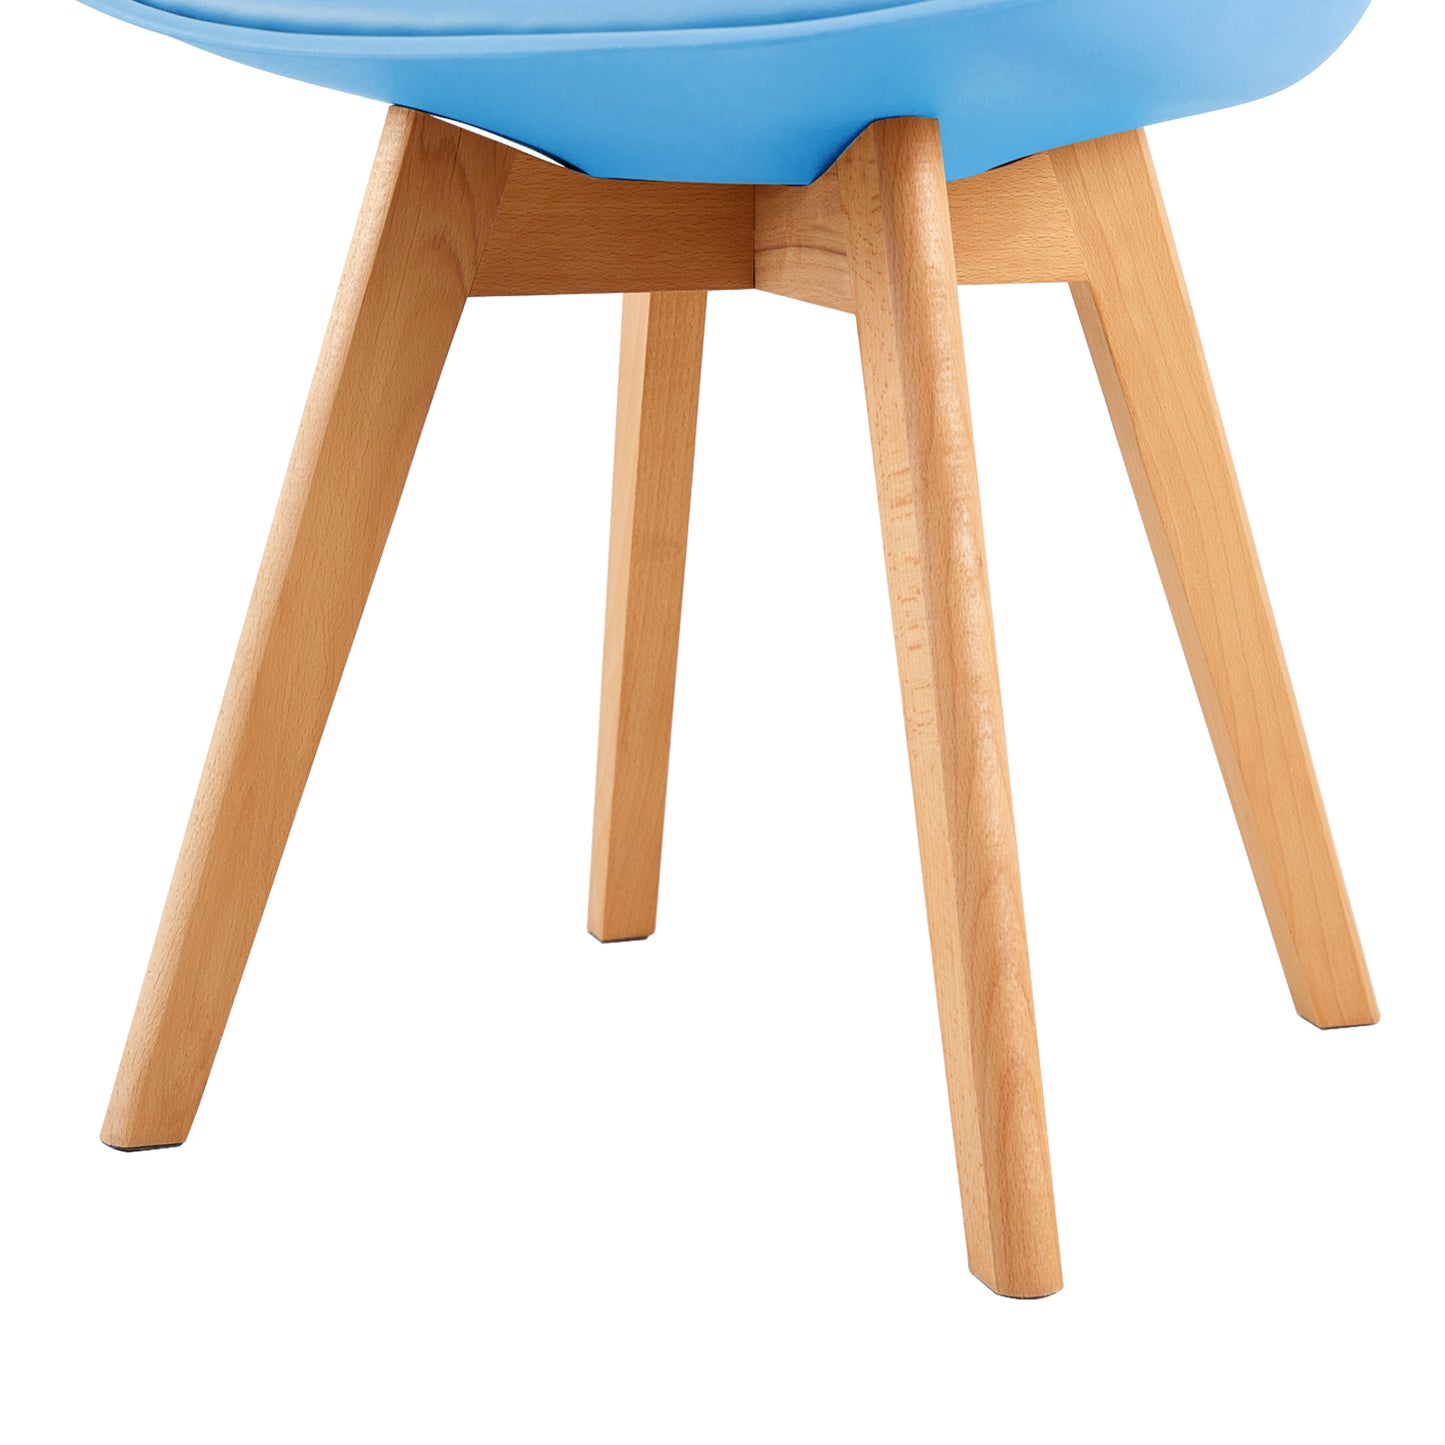 1 chaise de salle à manger design contemporain scandinave - Bleu